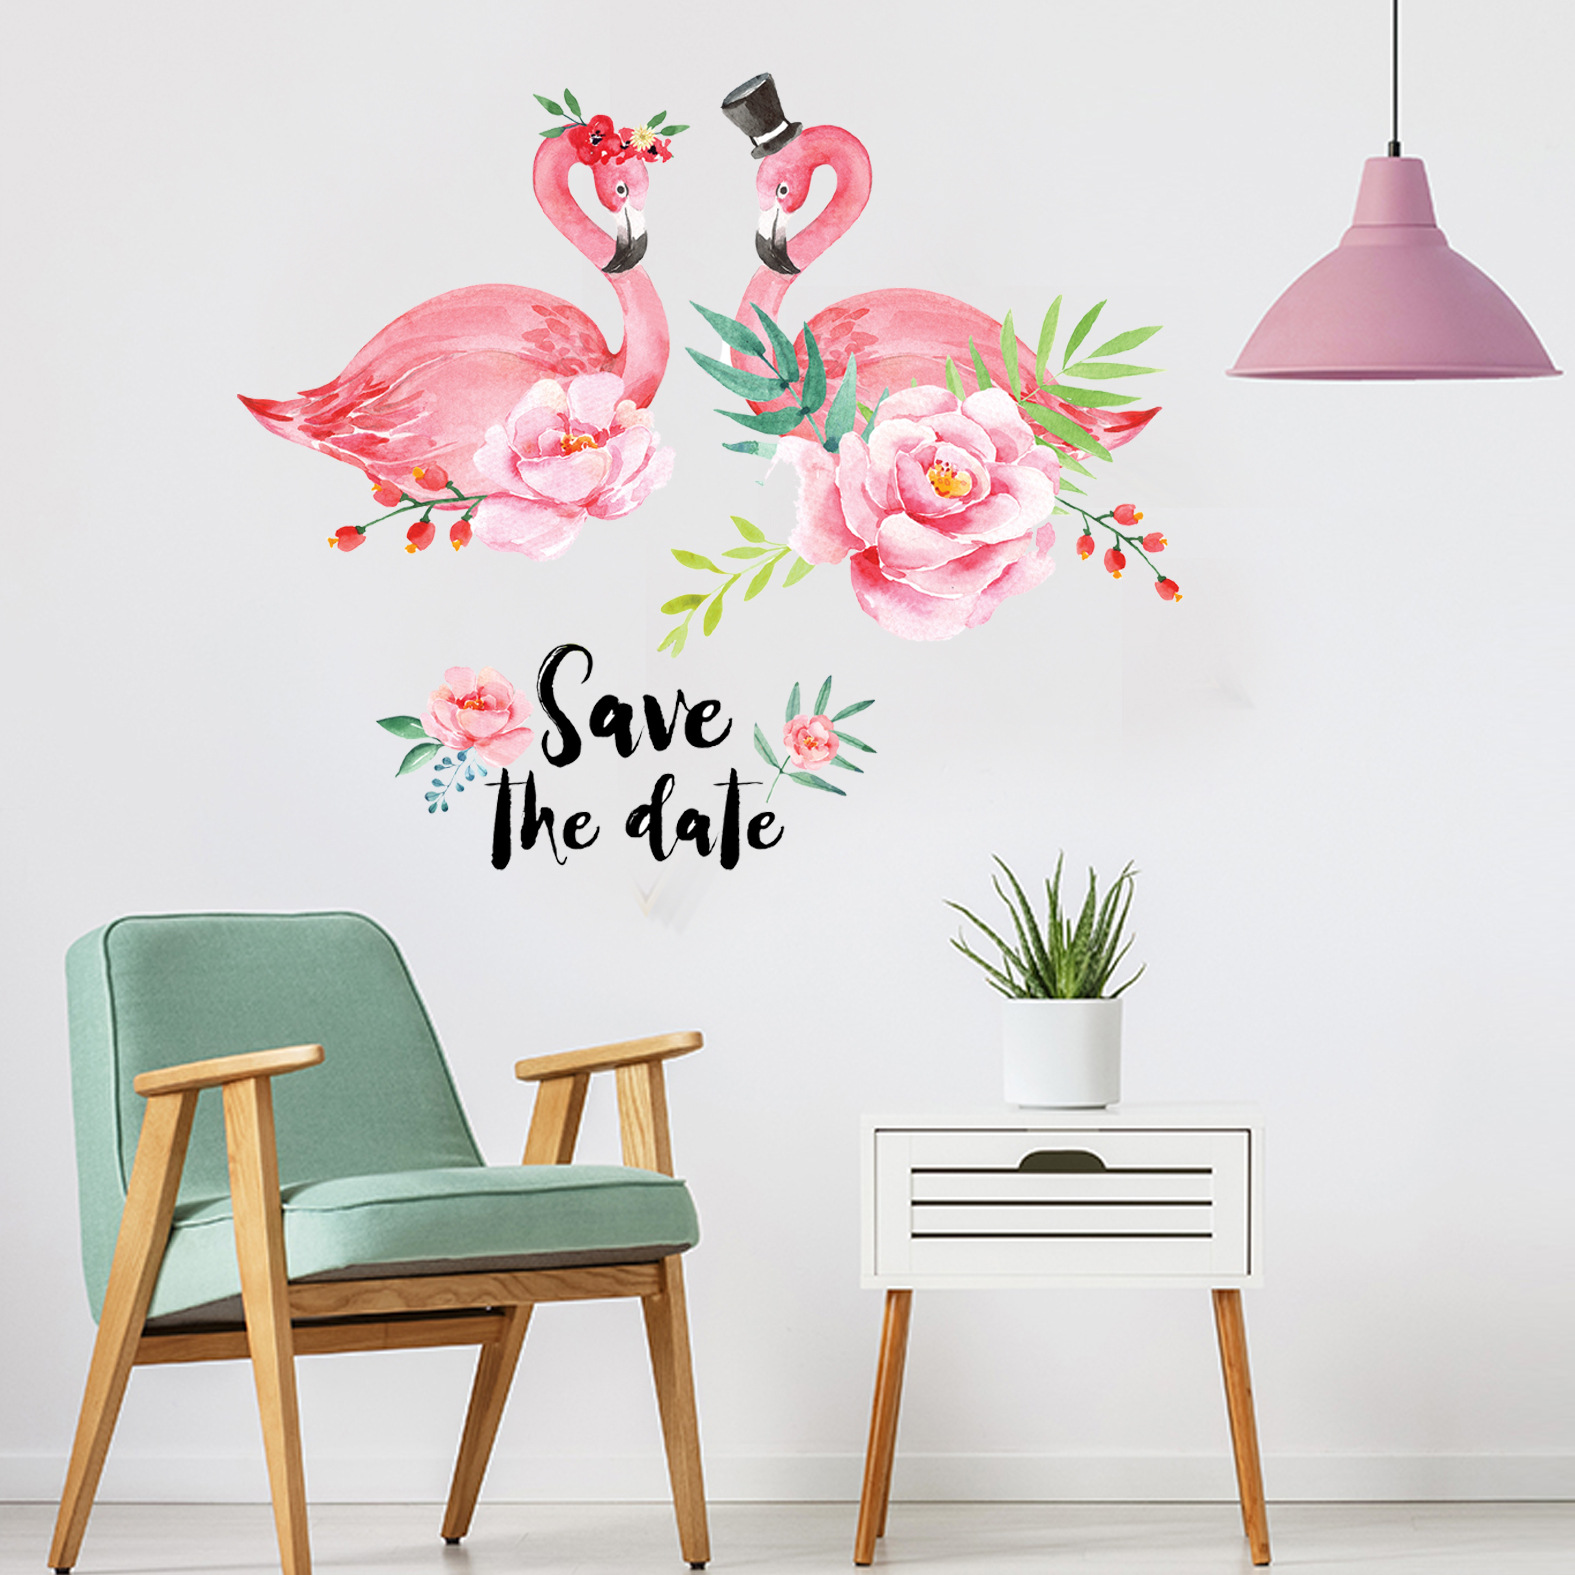 Miico-Creative-Pink-Love-Couple-Flamingo-Flower-PVC-Removable-Home-Room-Decorative-Decor-Sticker-1300666-2